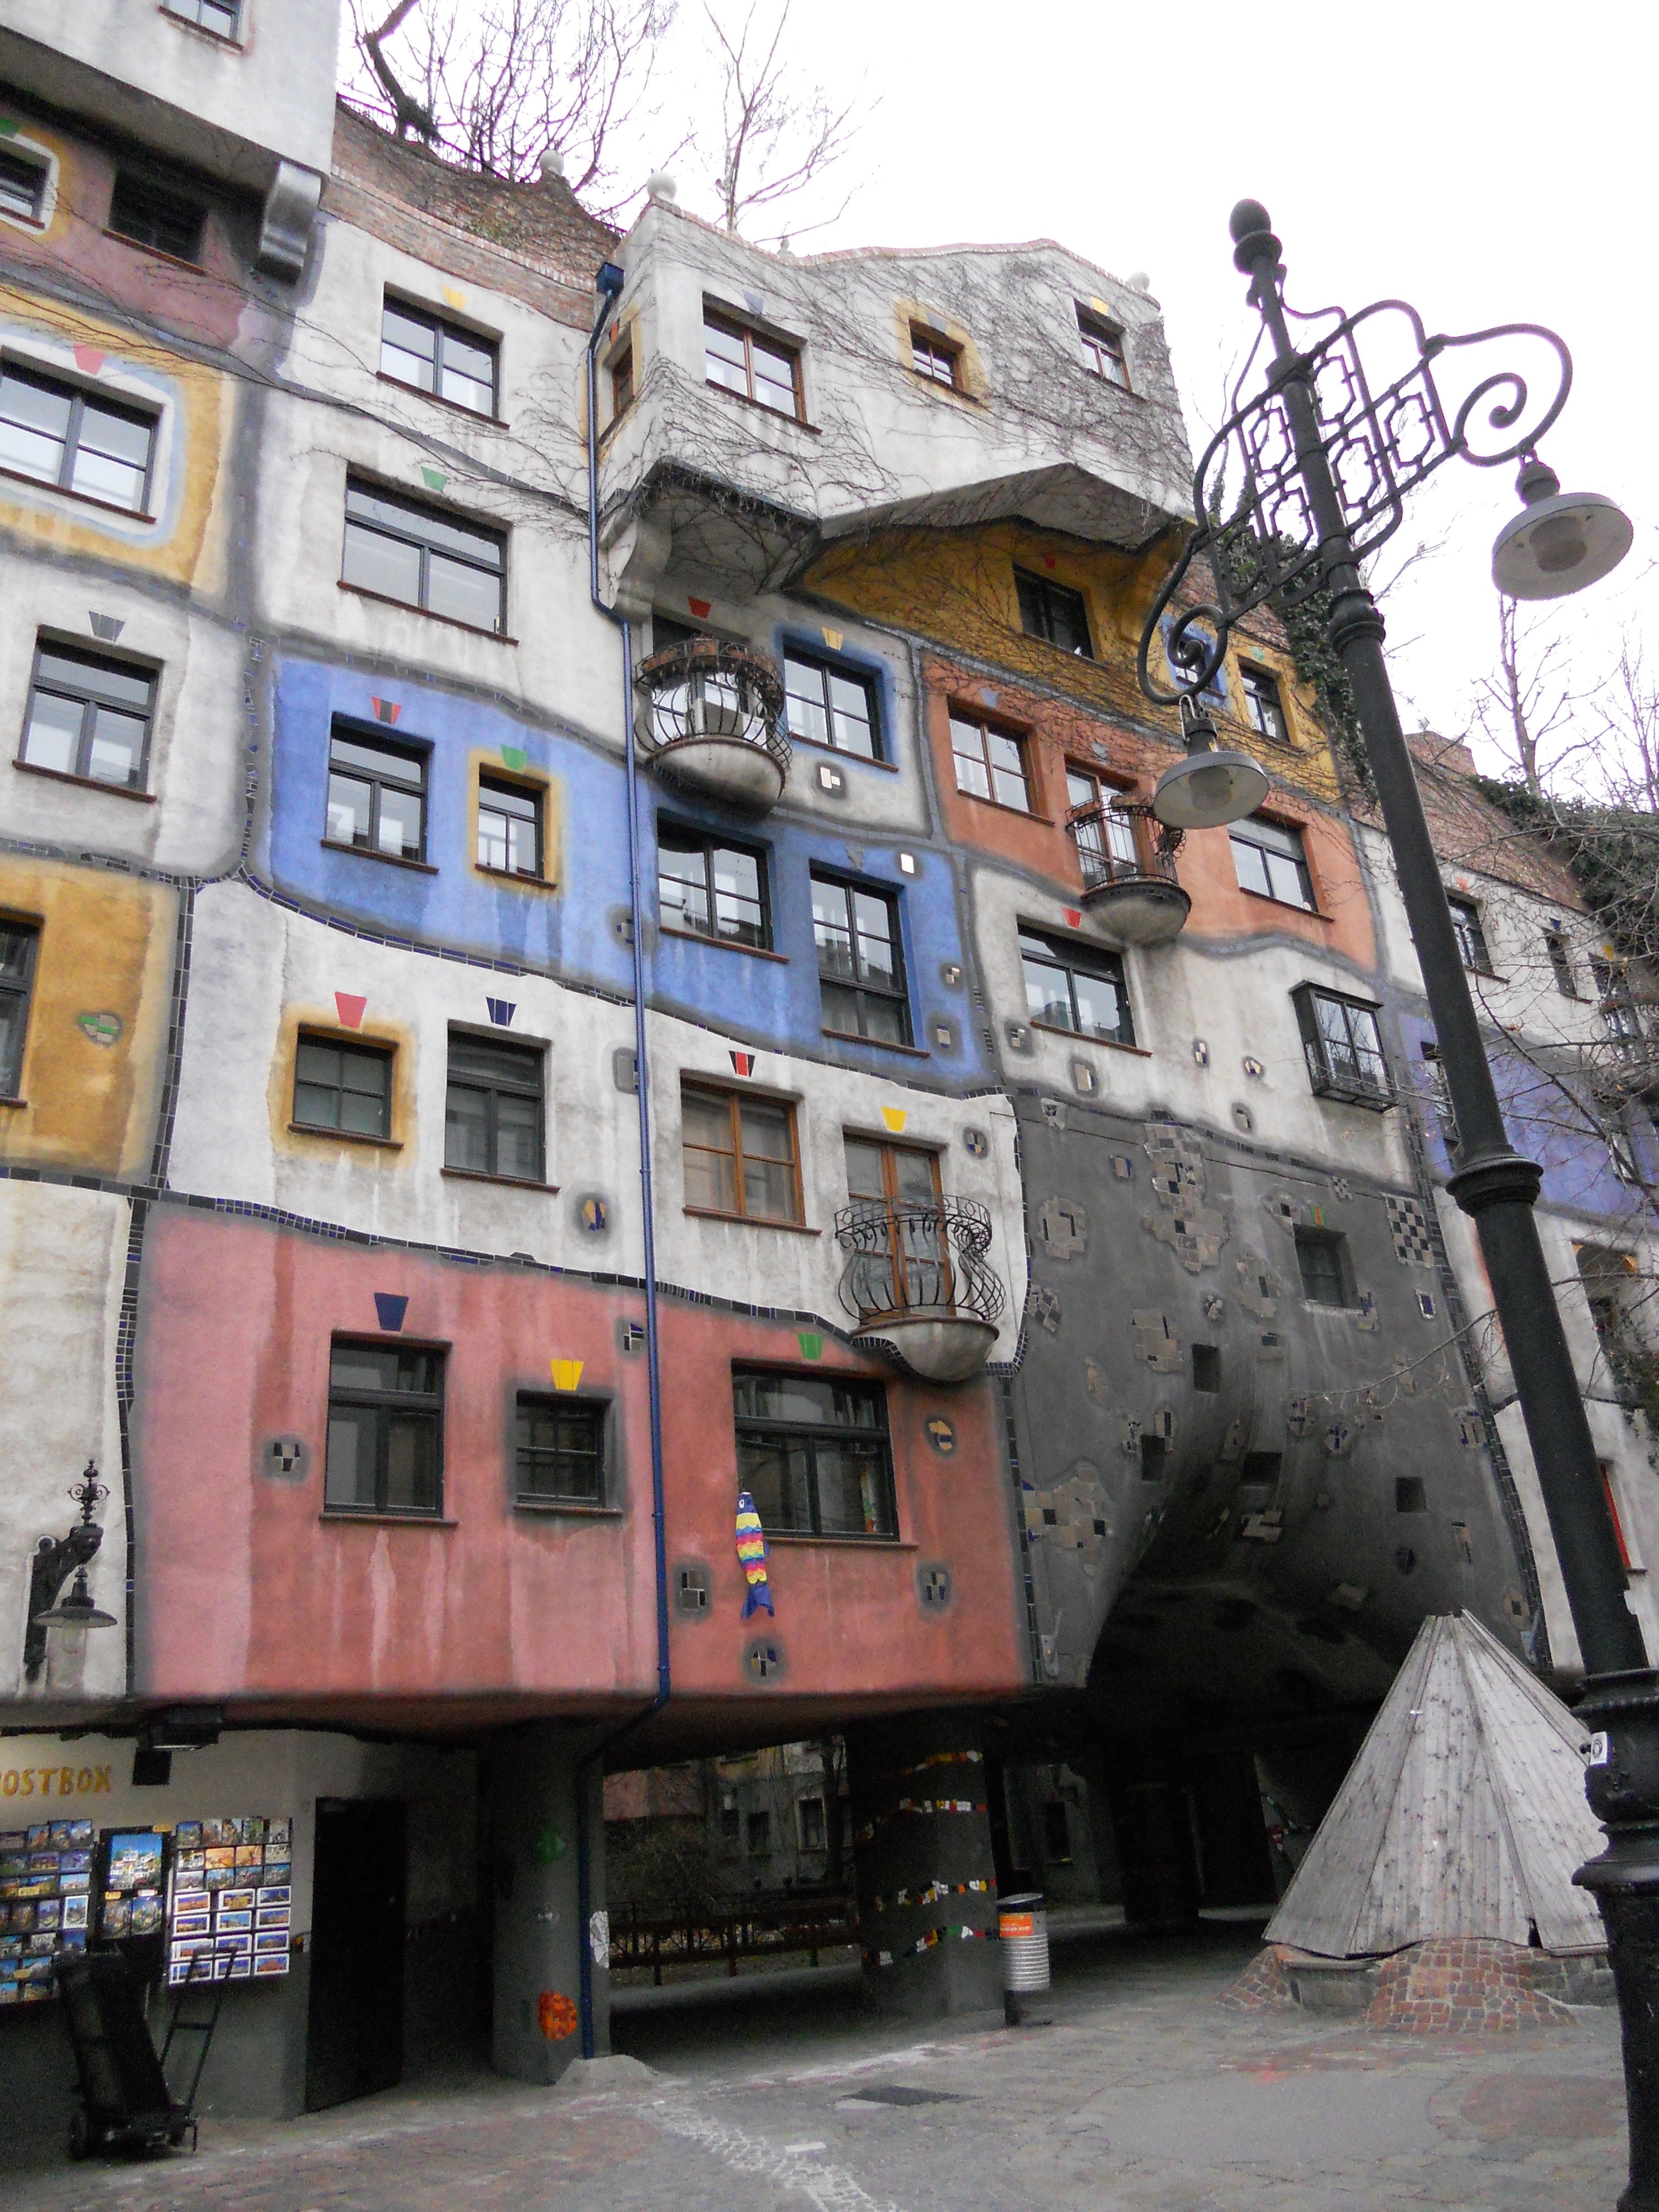 Hundertwasserhaus Wien.
